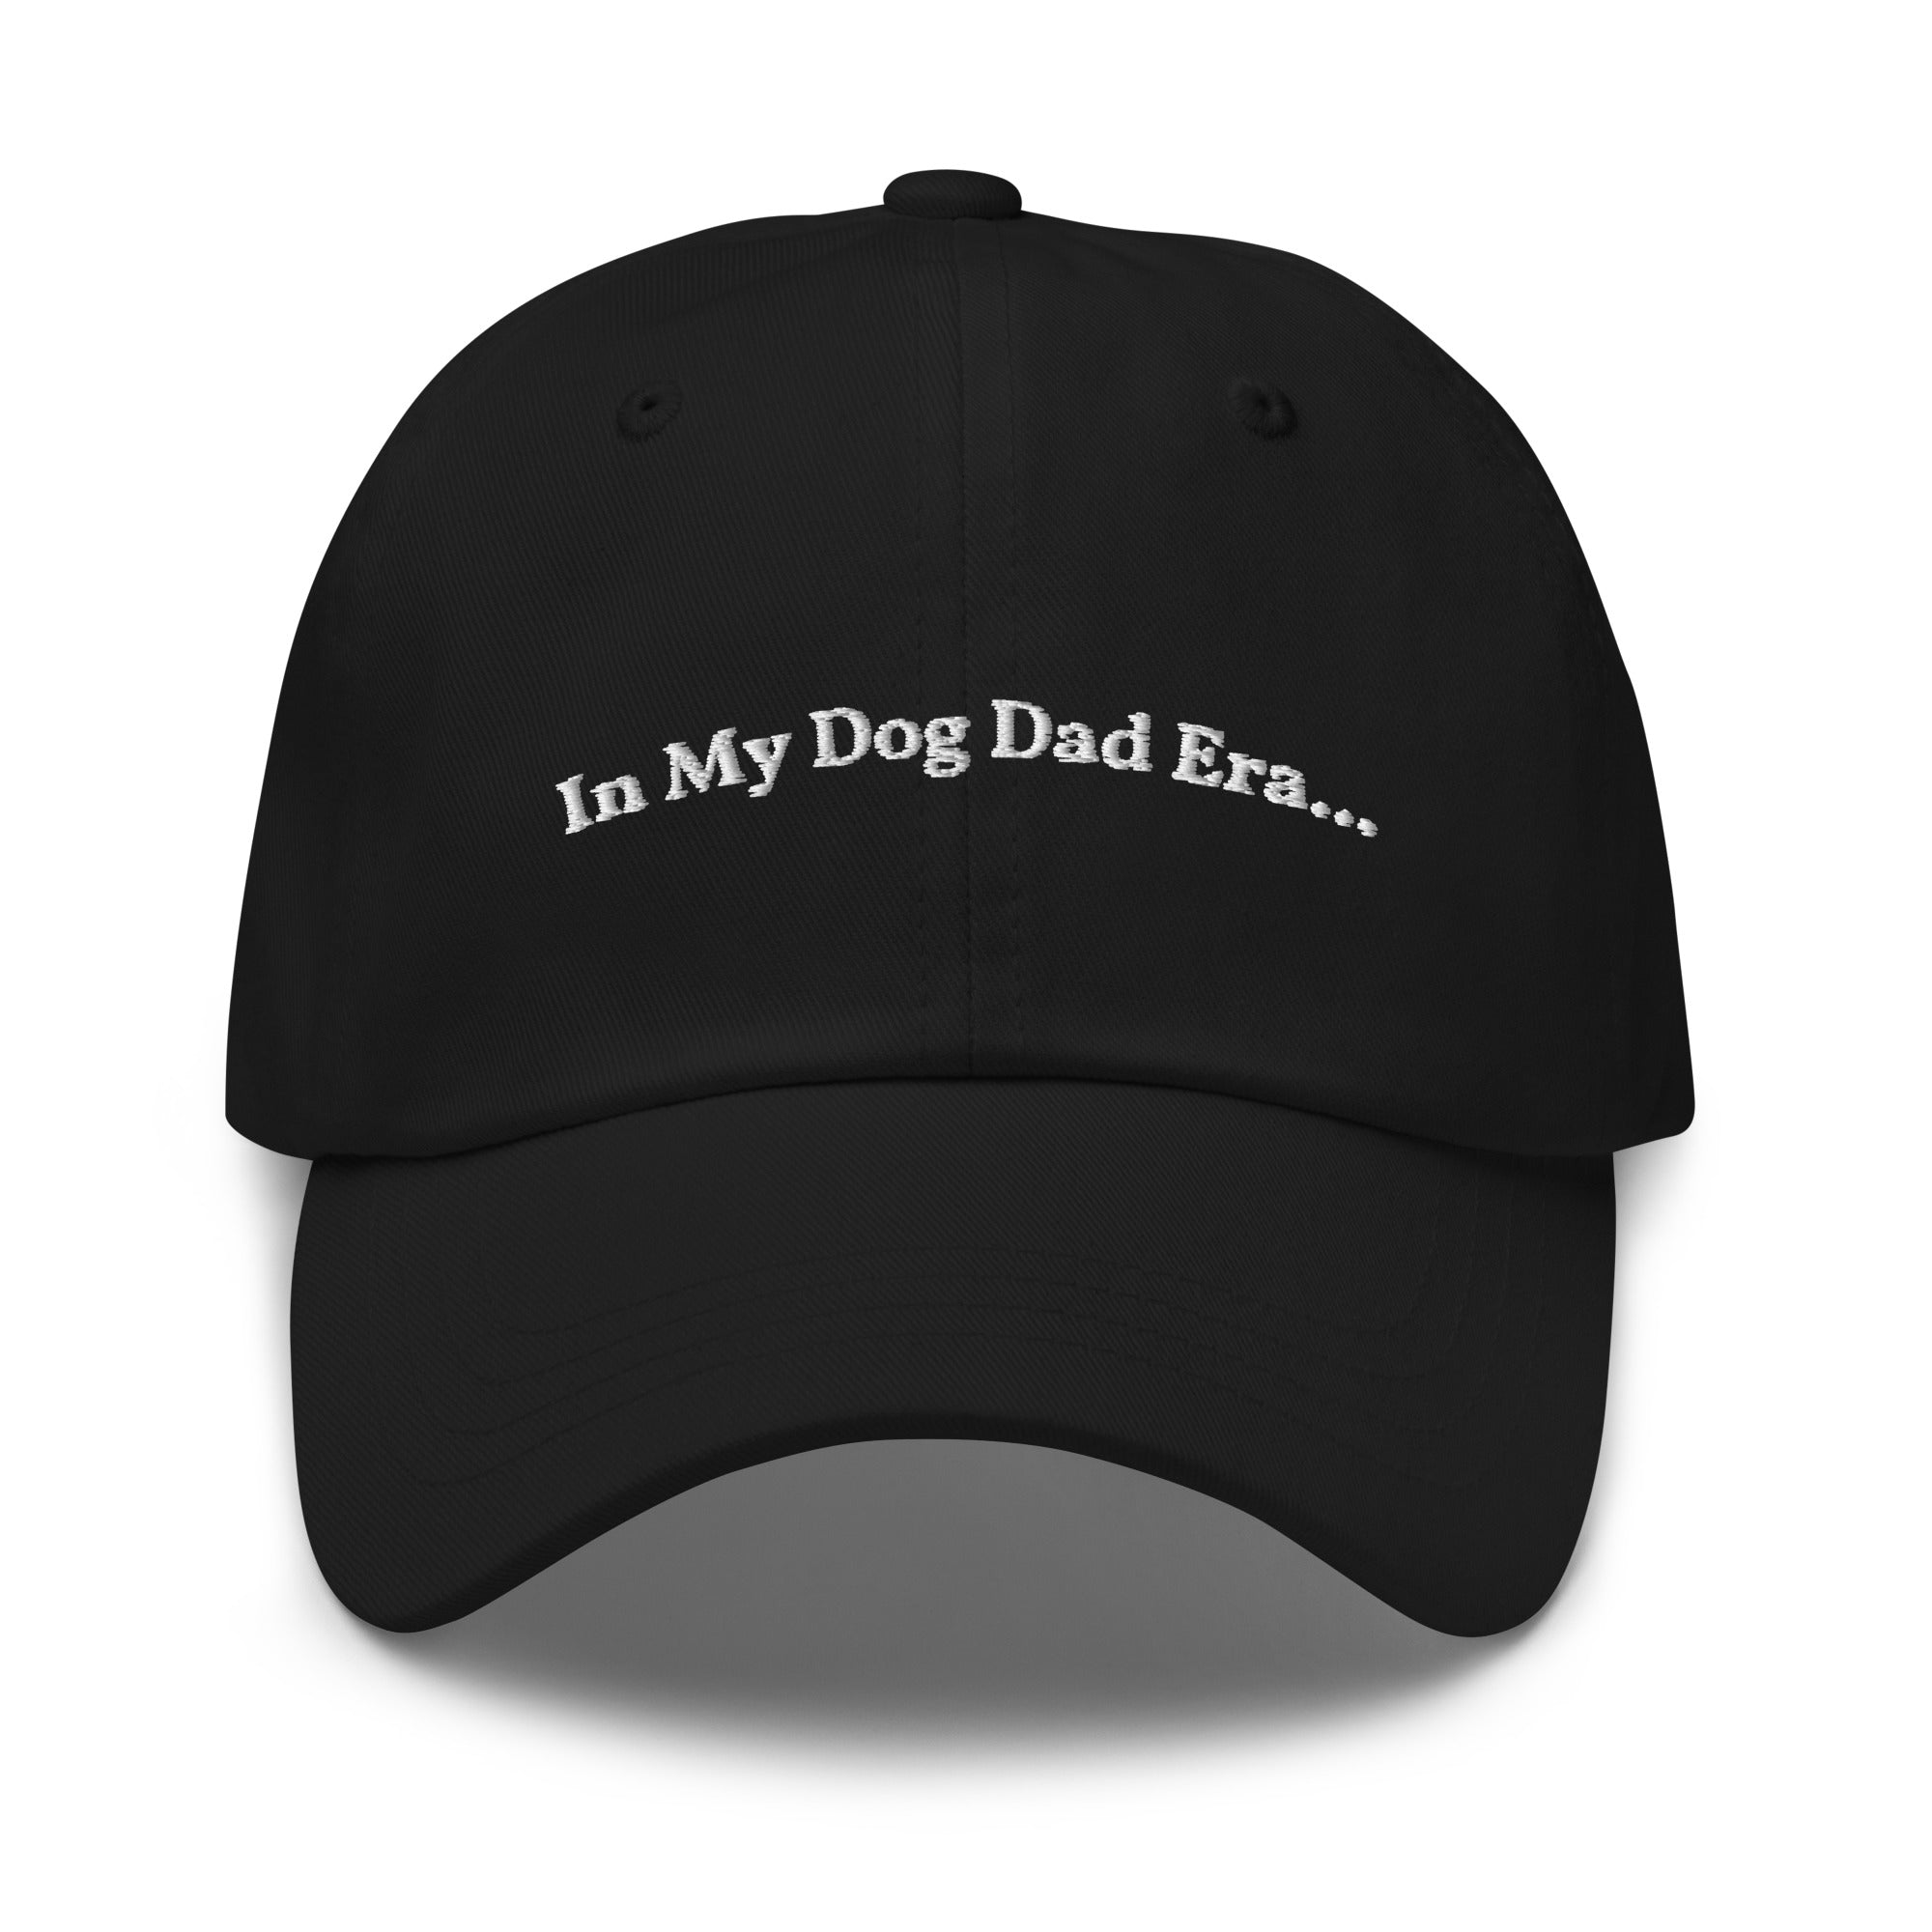 "In My Dog Dad Era..." hat